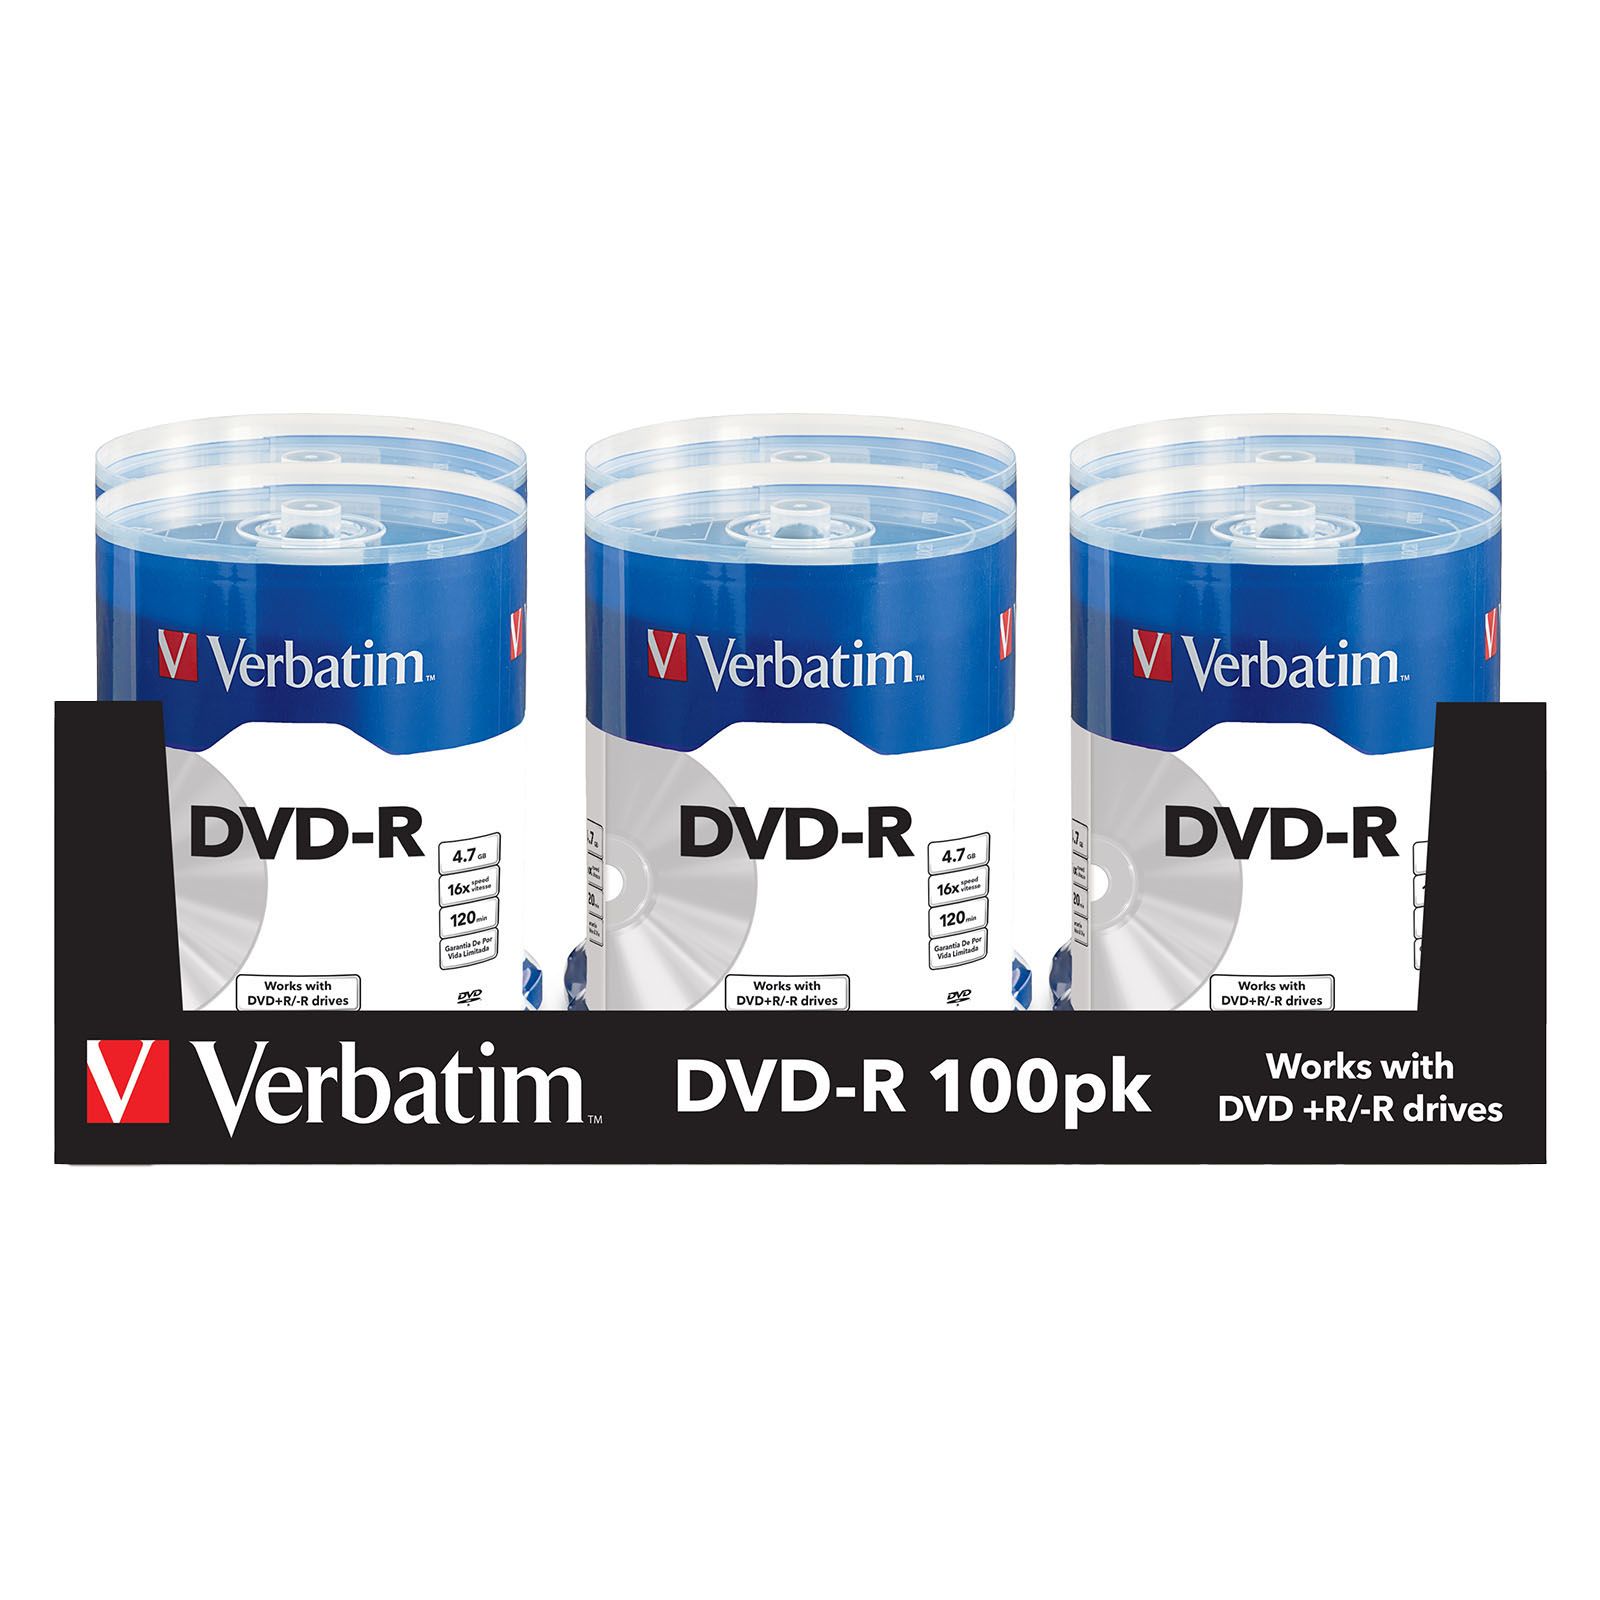 Verbatim Dvd R Blank Discs 100 Pk Bjs Wholesale Club